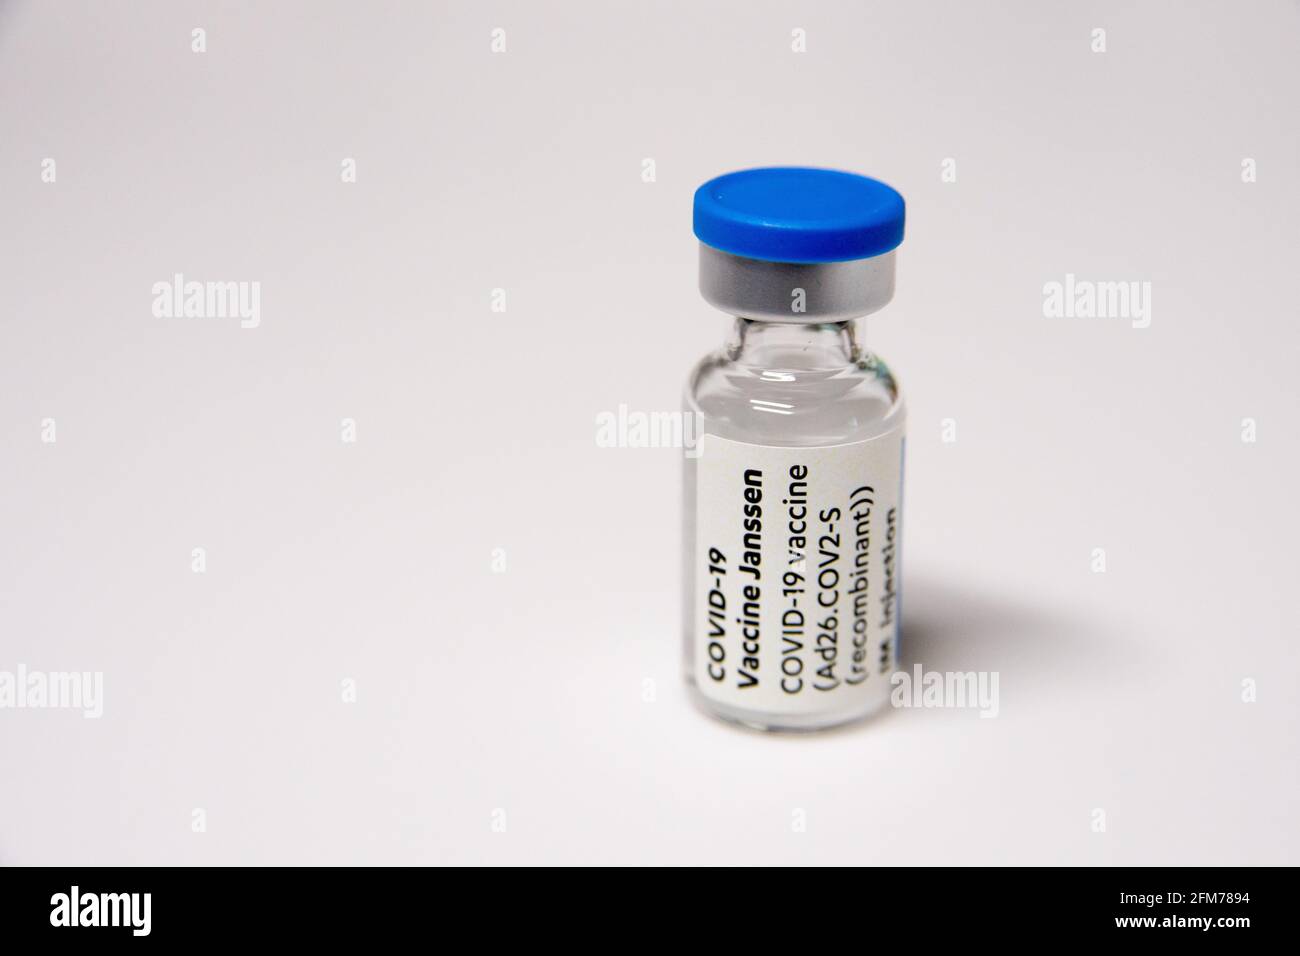 Johnson & Johnson COVID-19 vaccine in Poland, May 3rd  2021 © Wojciech Strozyk / Alamy Stock Photo Stock Photo